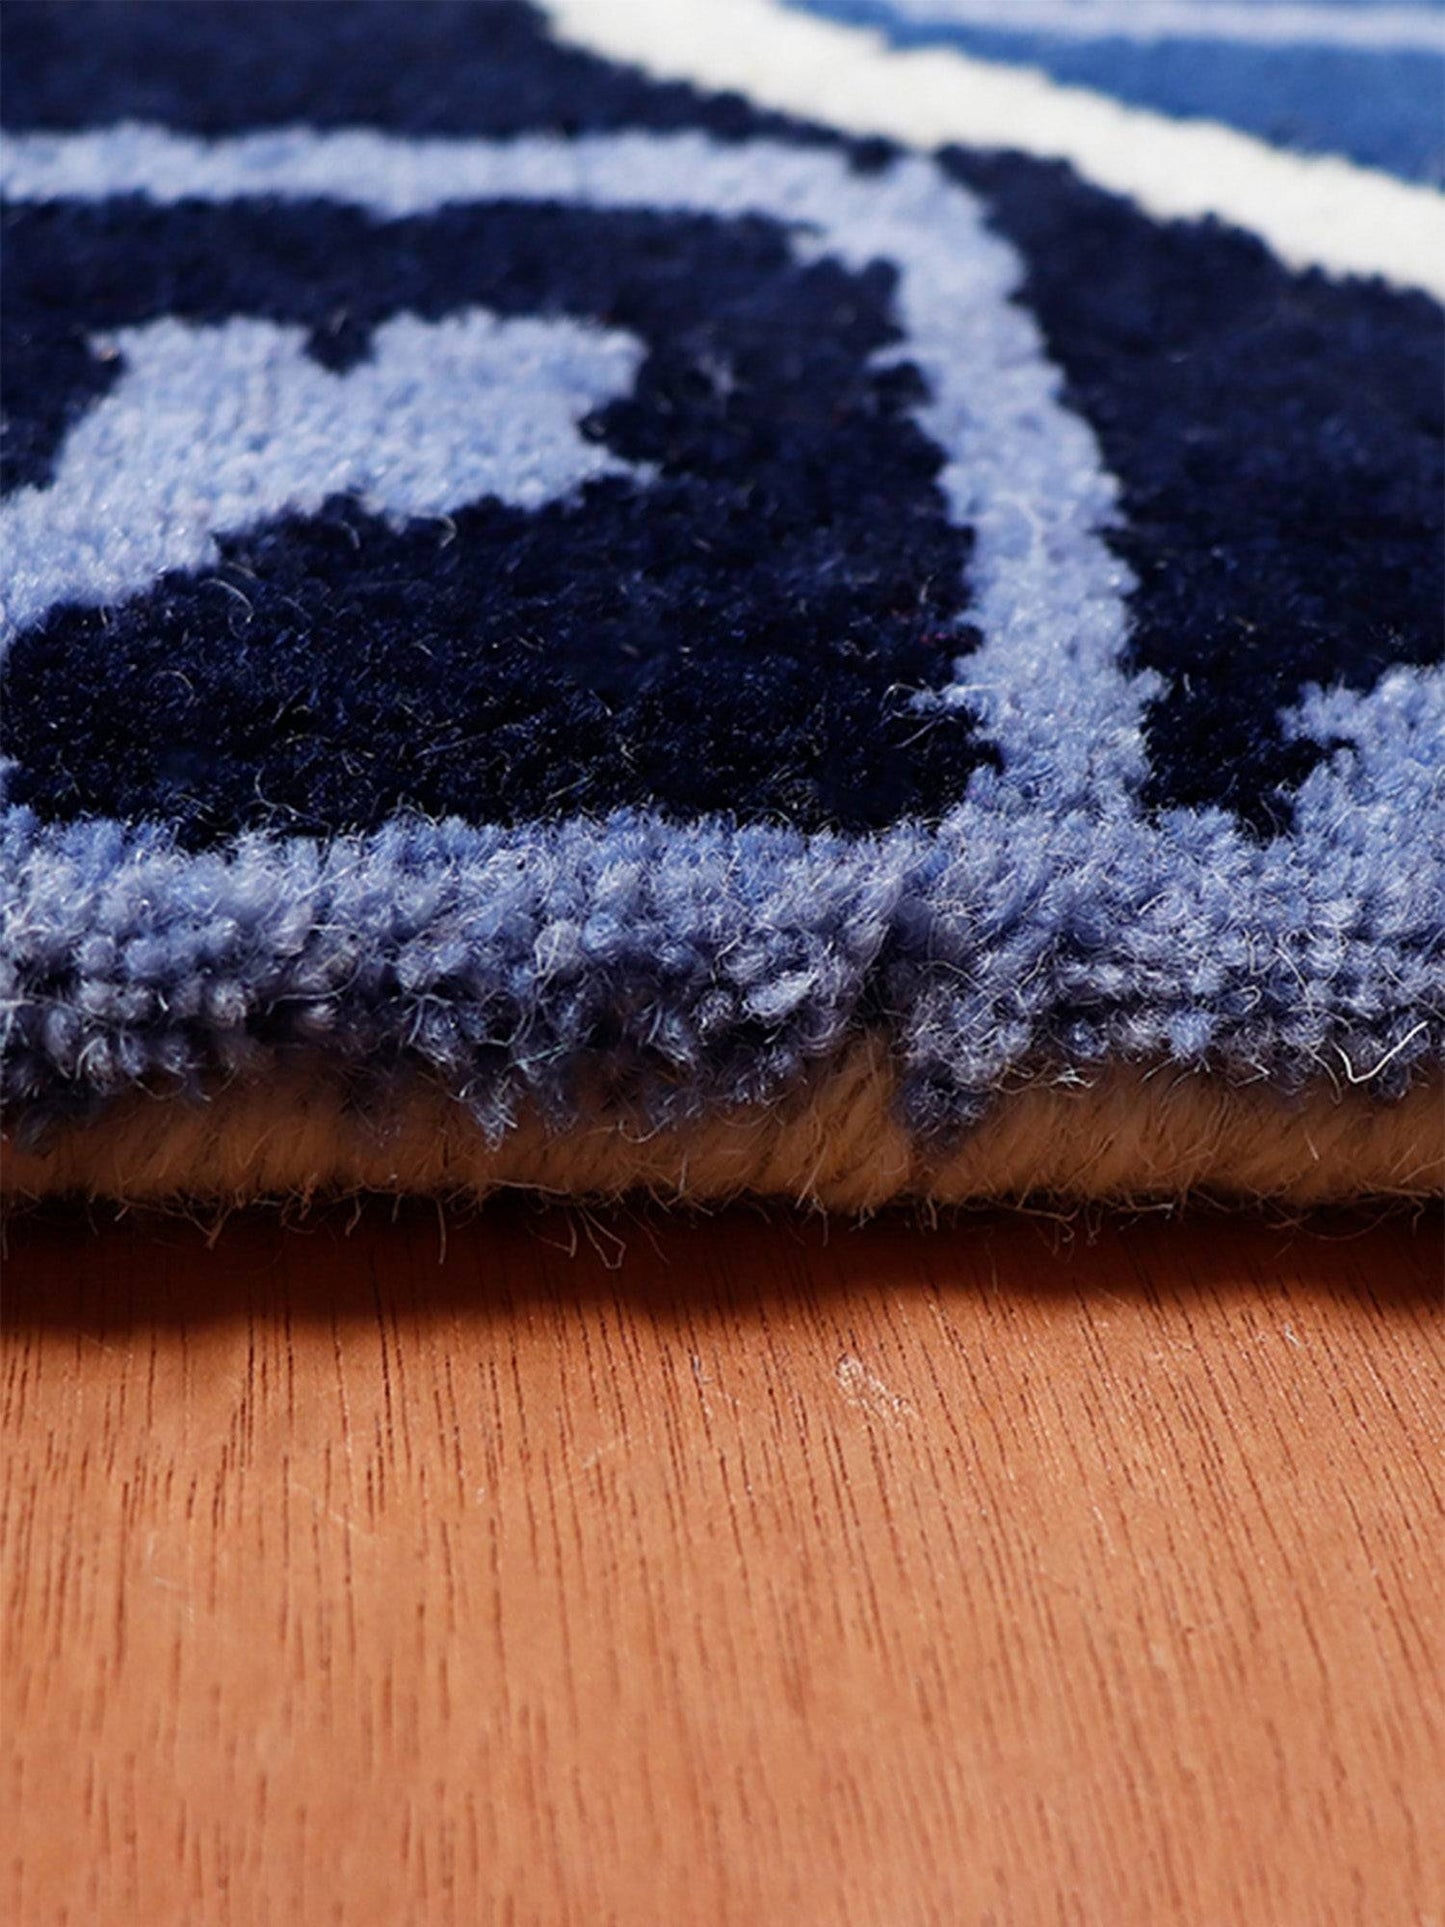 Carpet Hand Tufted 100% Woollen Tile Patchwark Off White Blue - 4ft X 6ft